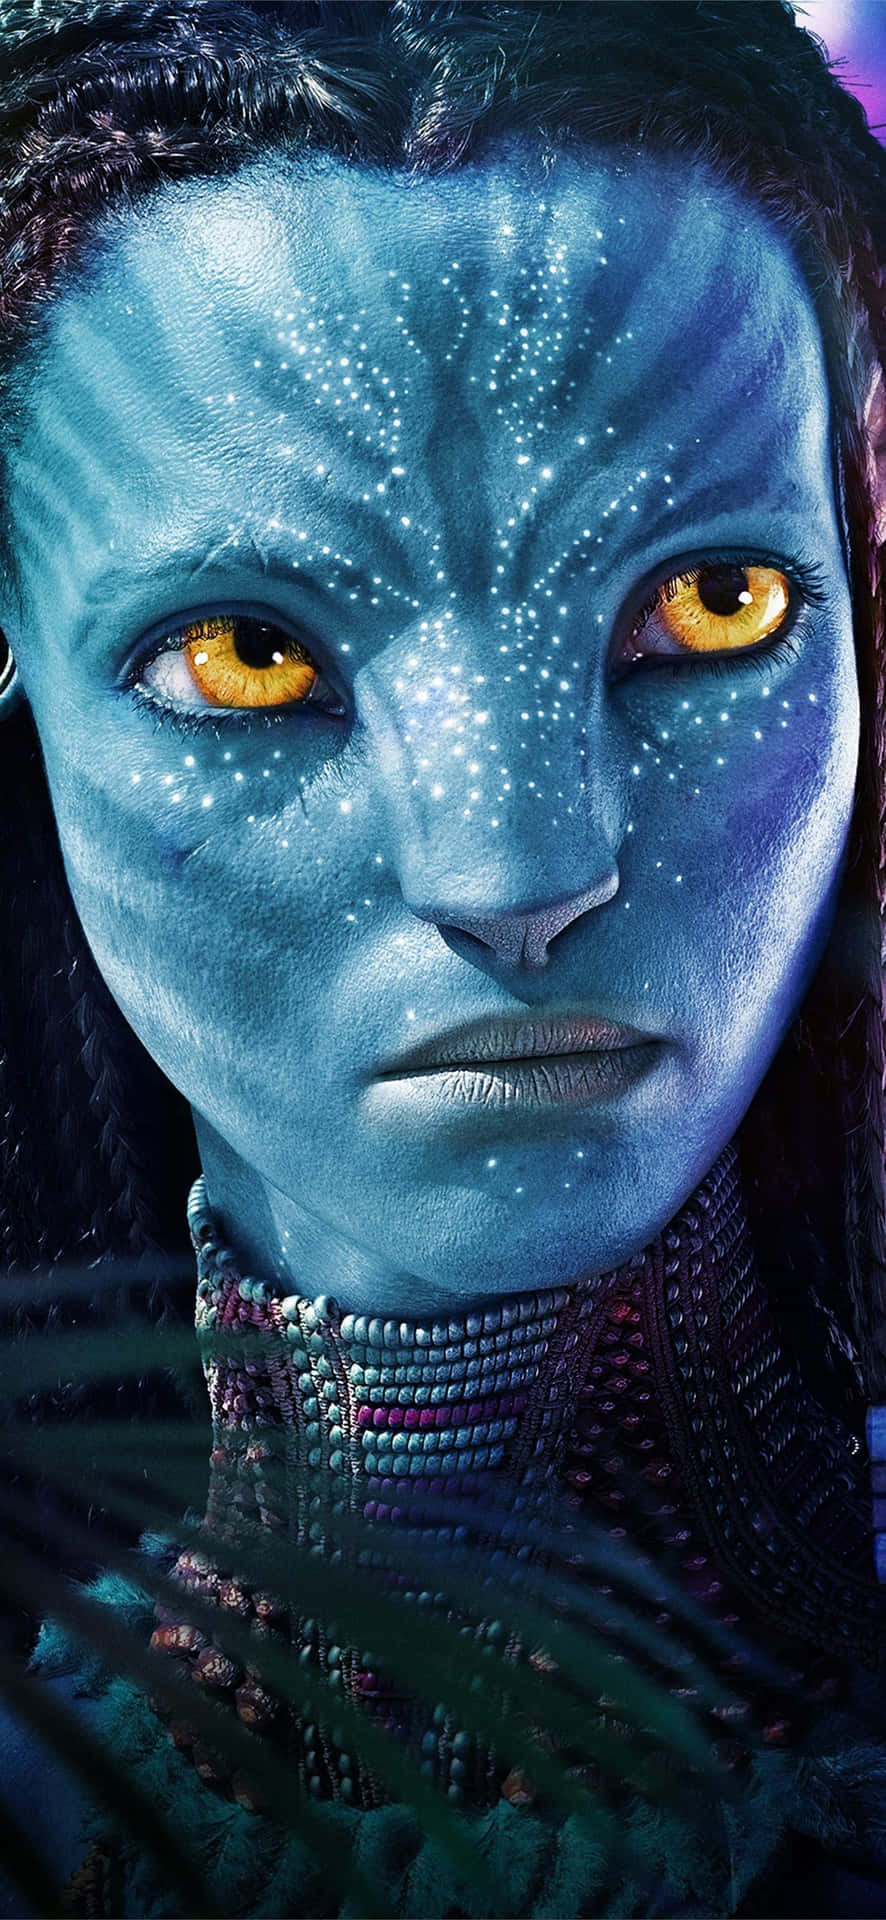 Avatar Movie Character Close Up Wallpaper